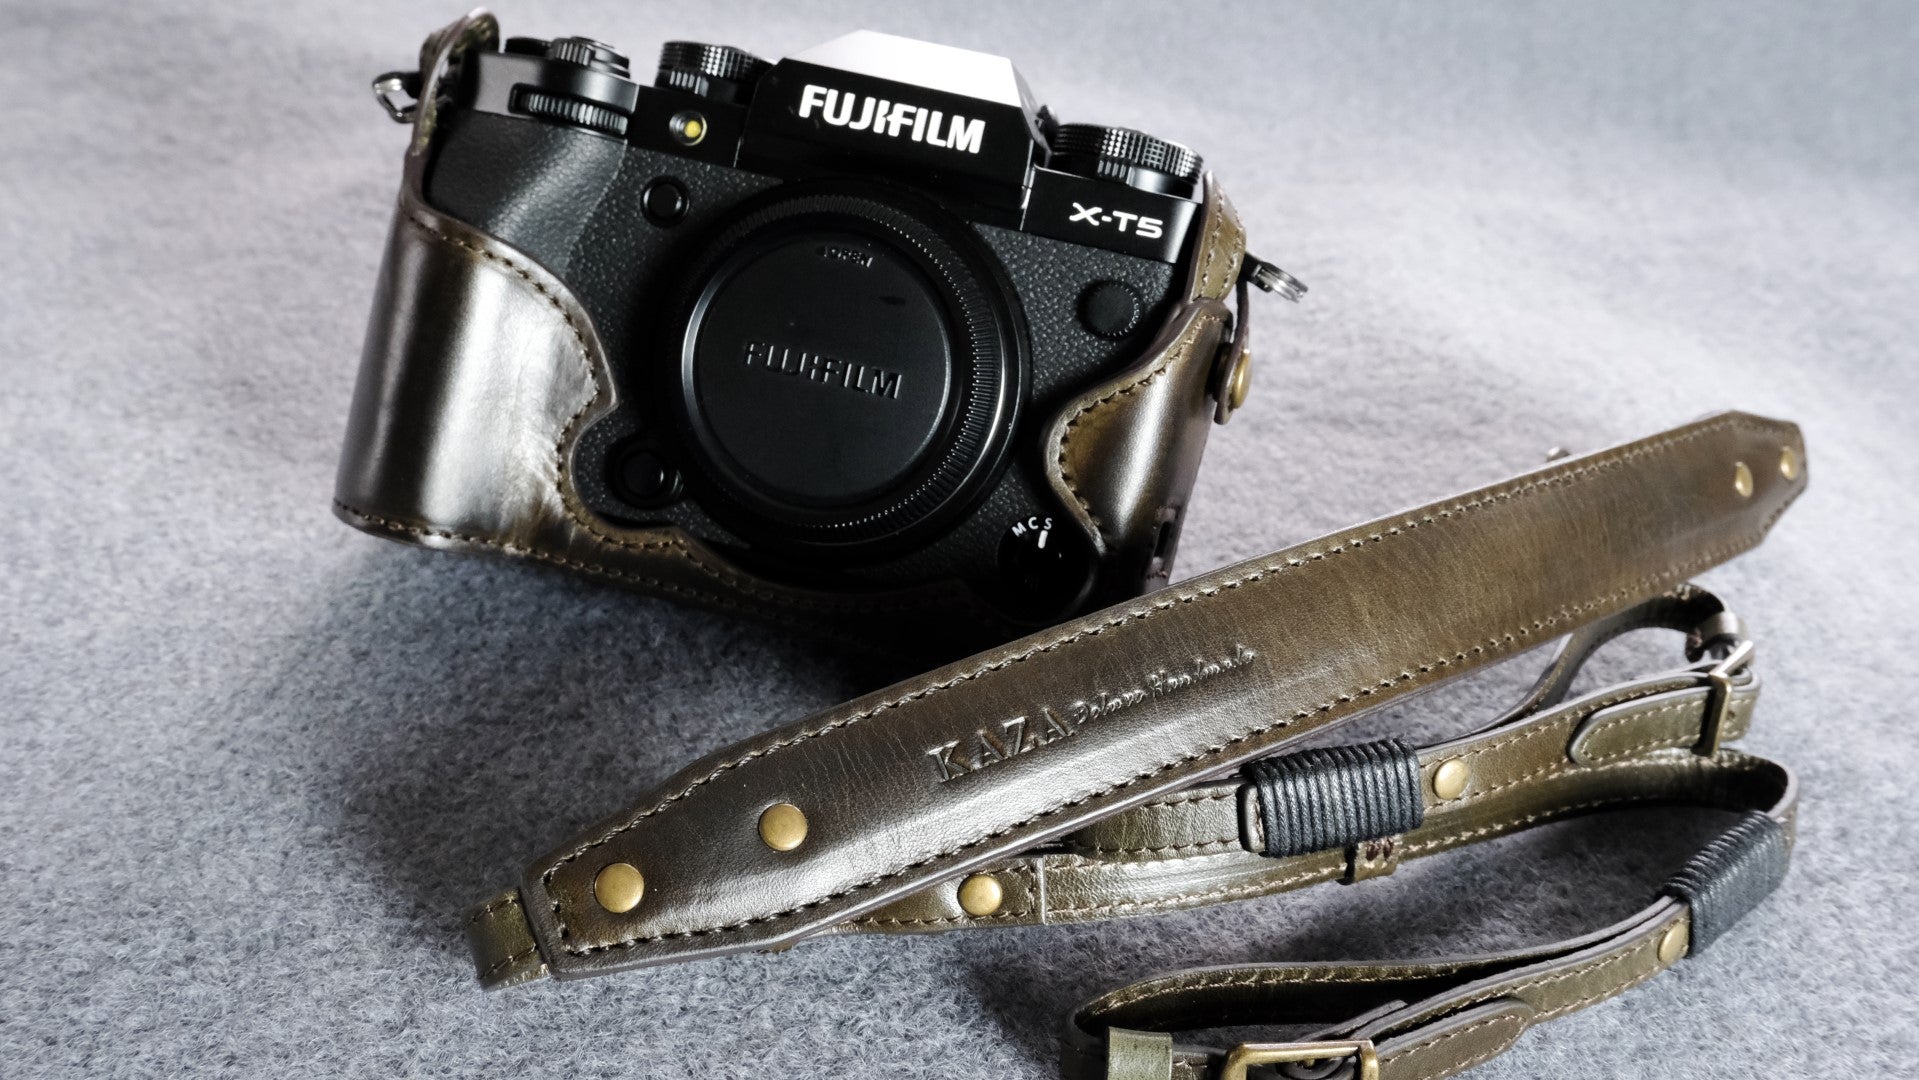 Rieibi Fuji XT5 Case - Quality Genuine Leather Half Case for Fujifilm X-T5  Digital Camera - Body Protective Grip Case for Fuji XT5 X-T5, Black, Beauty